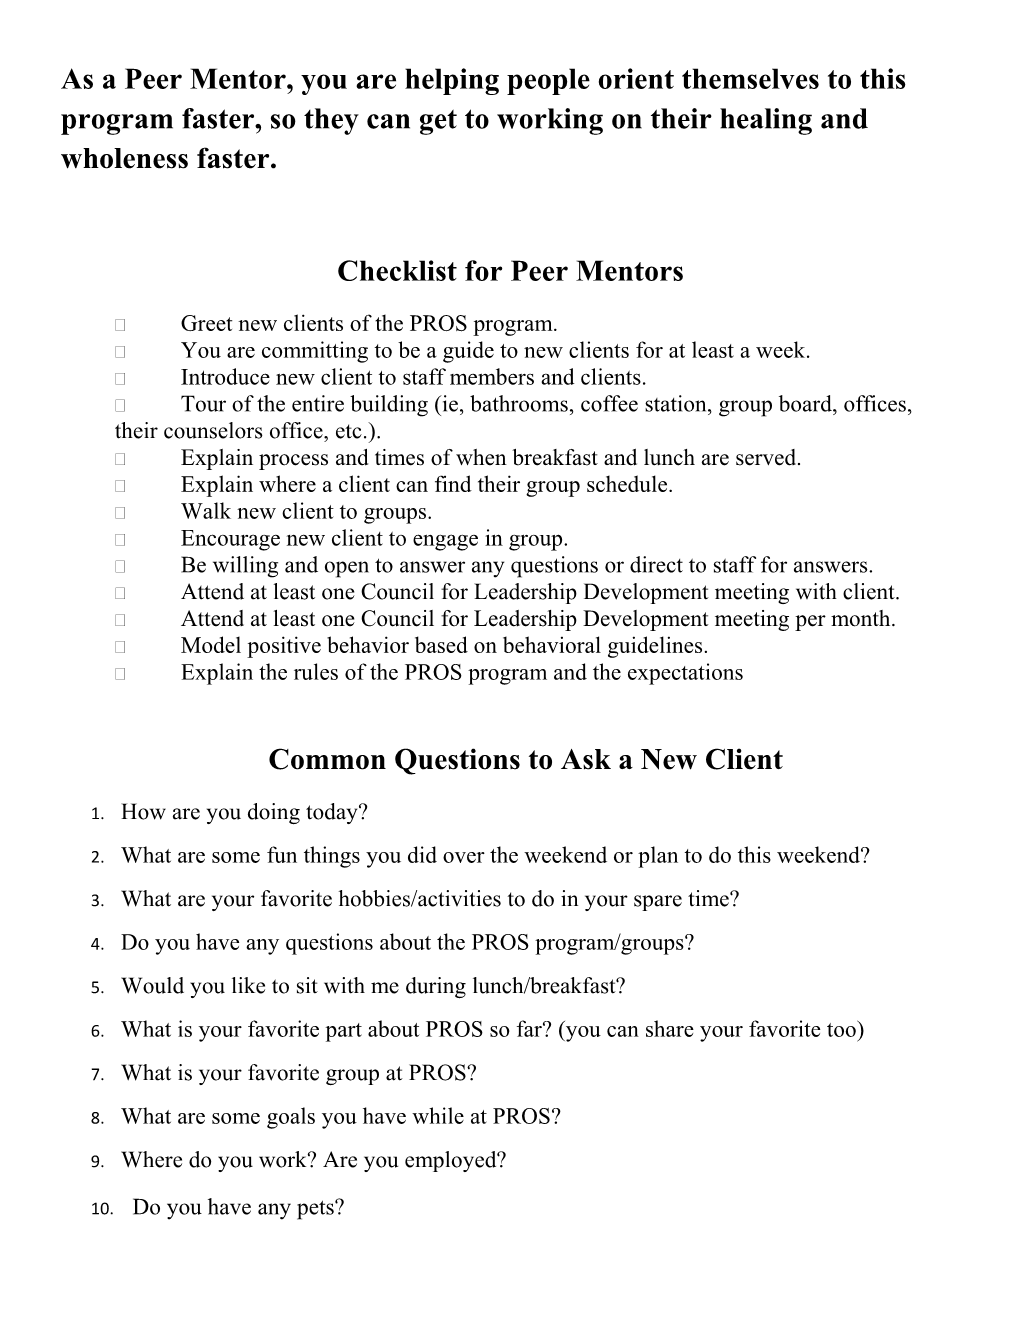 Checklist for Peer Mentors